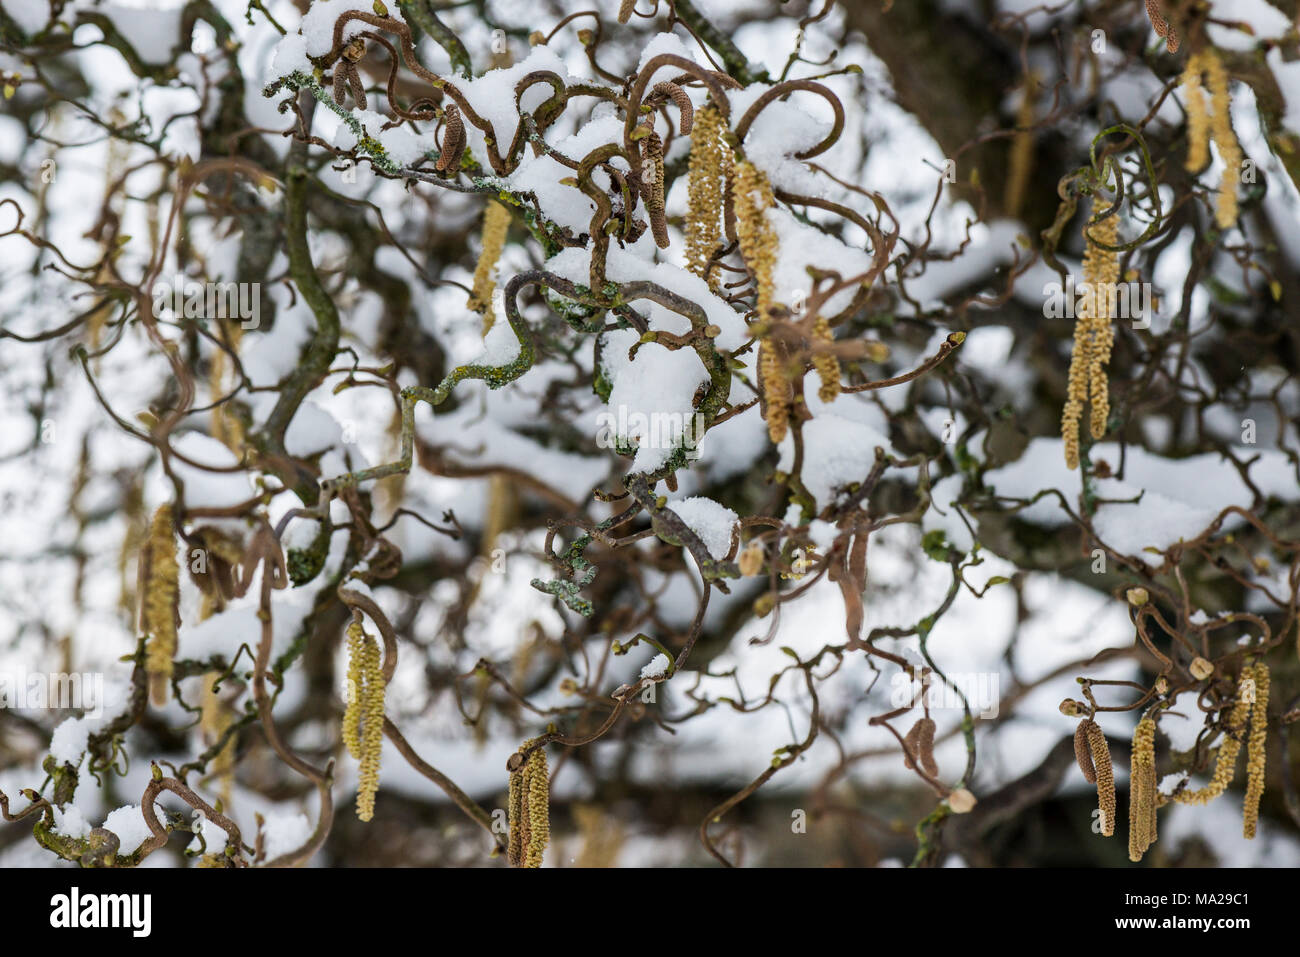 A close up of the catkins of a corkscrew hazel (Corylus avellana 'Contorta') after snowfall Stock Photo